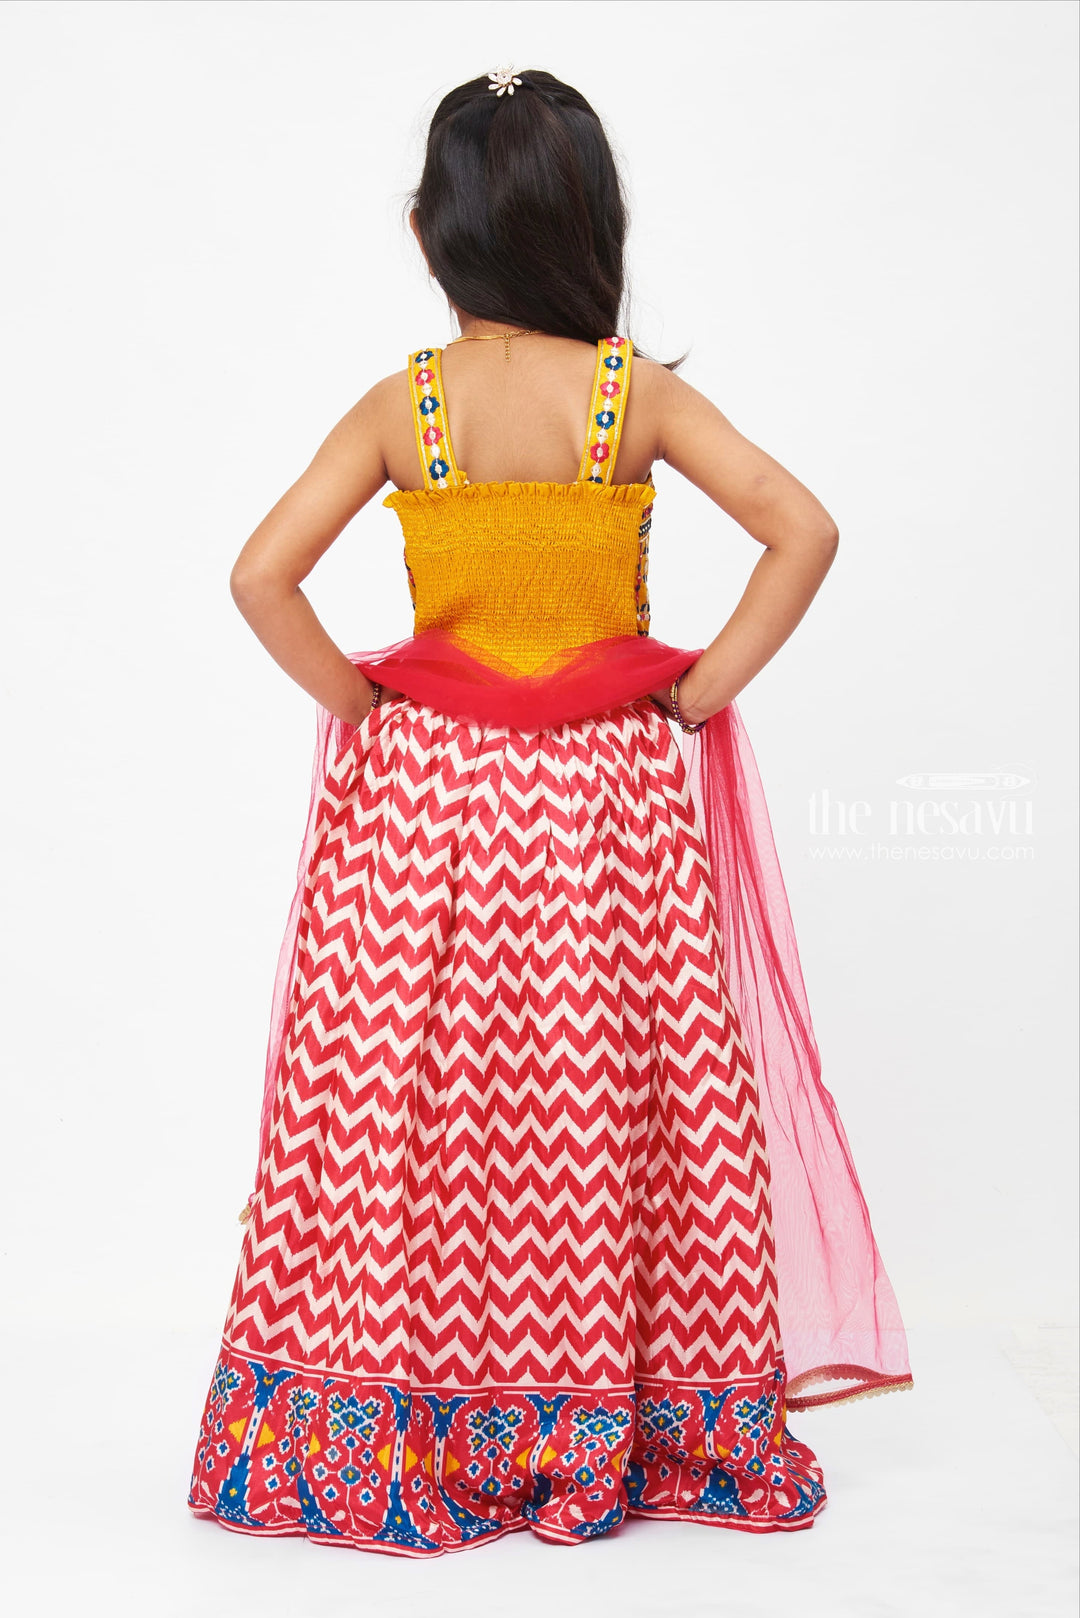 The Nesavu Girls Lehenga Choli Vibrant Yellow Top and Chevron Print Ethnic Lehenga Choli for Girls Nesavu Traditional Indian Dress for kids | Cultural Festival Clothing | The Nesavu